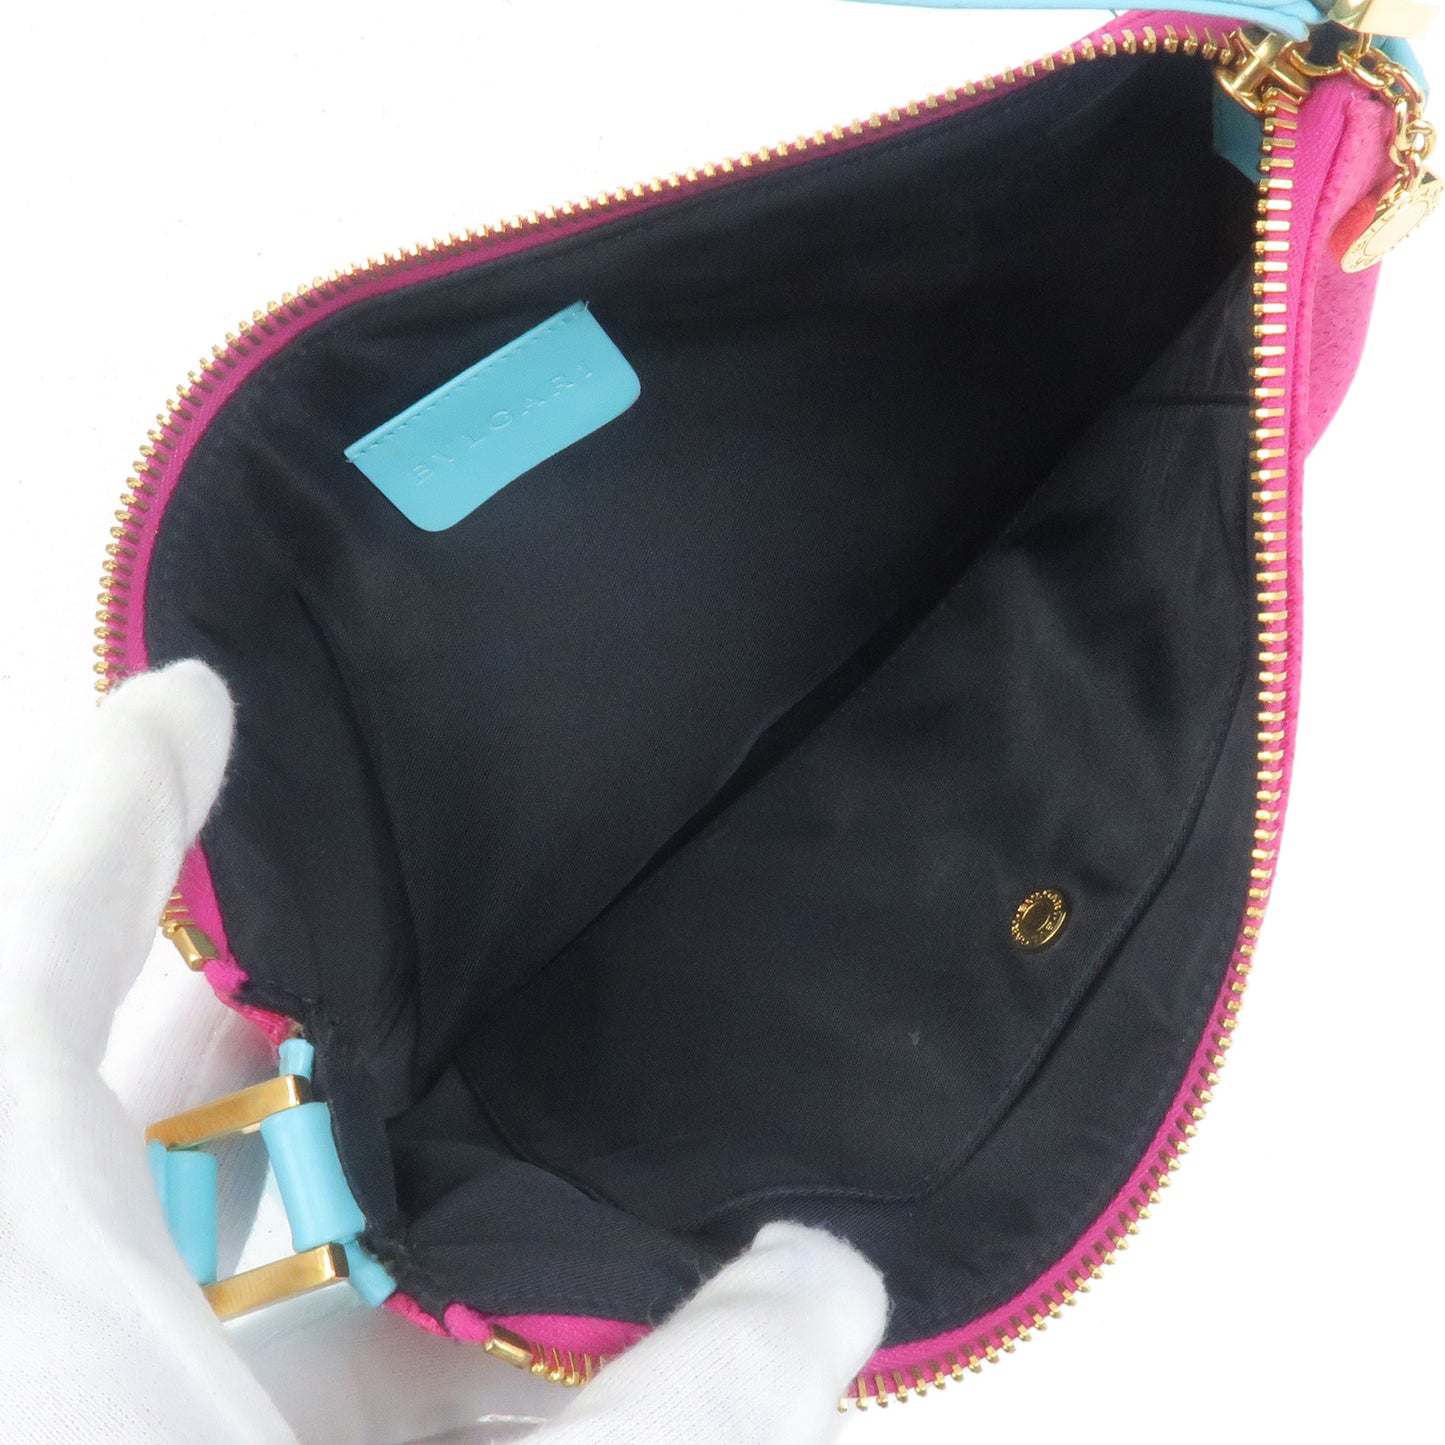 BVLGARI Bvlgari Bvlgari Nylon Leather Pouch Shoulder Bag Pink